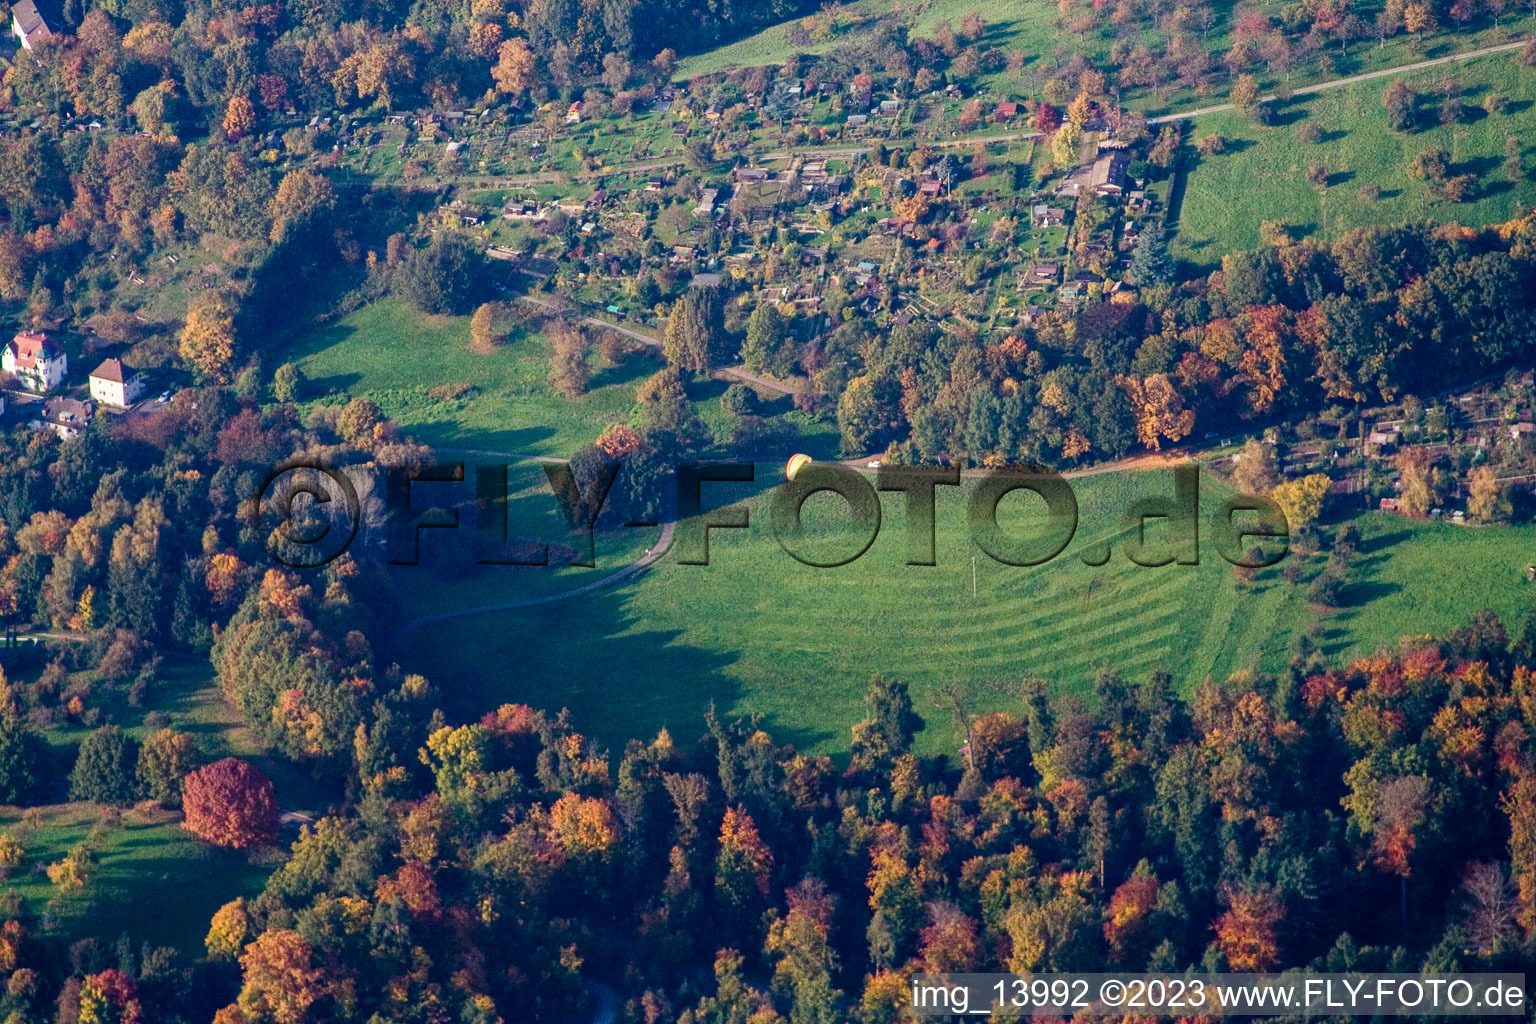 Landing site on Mercury in Baden-Baden in the state Baden-Wuerttemberg, Germany